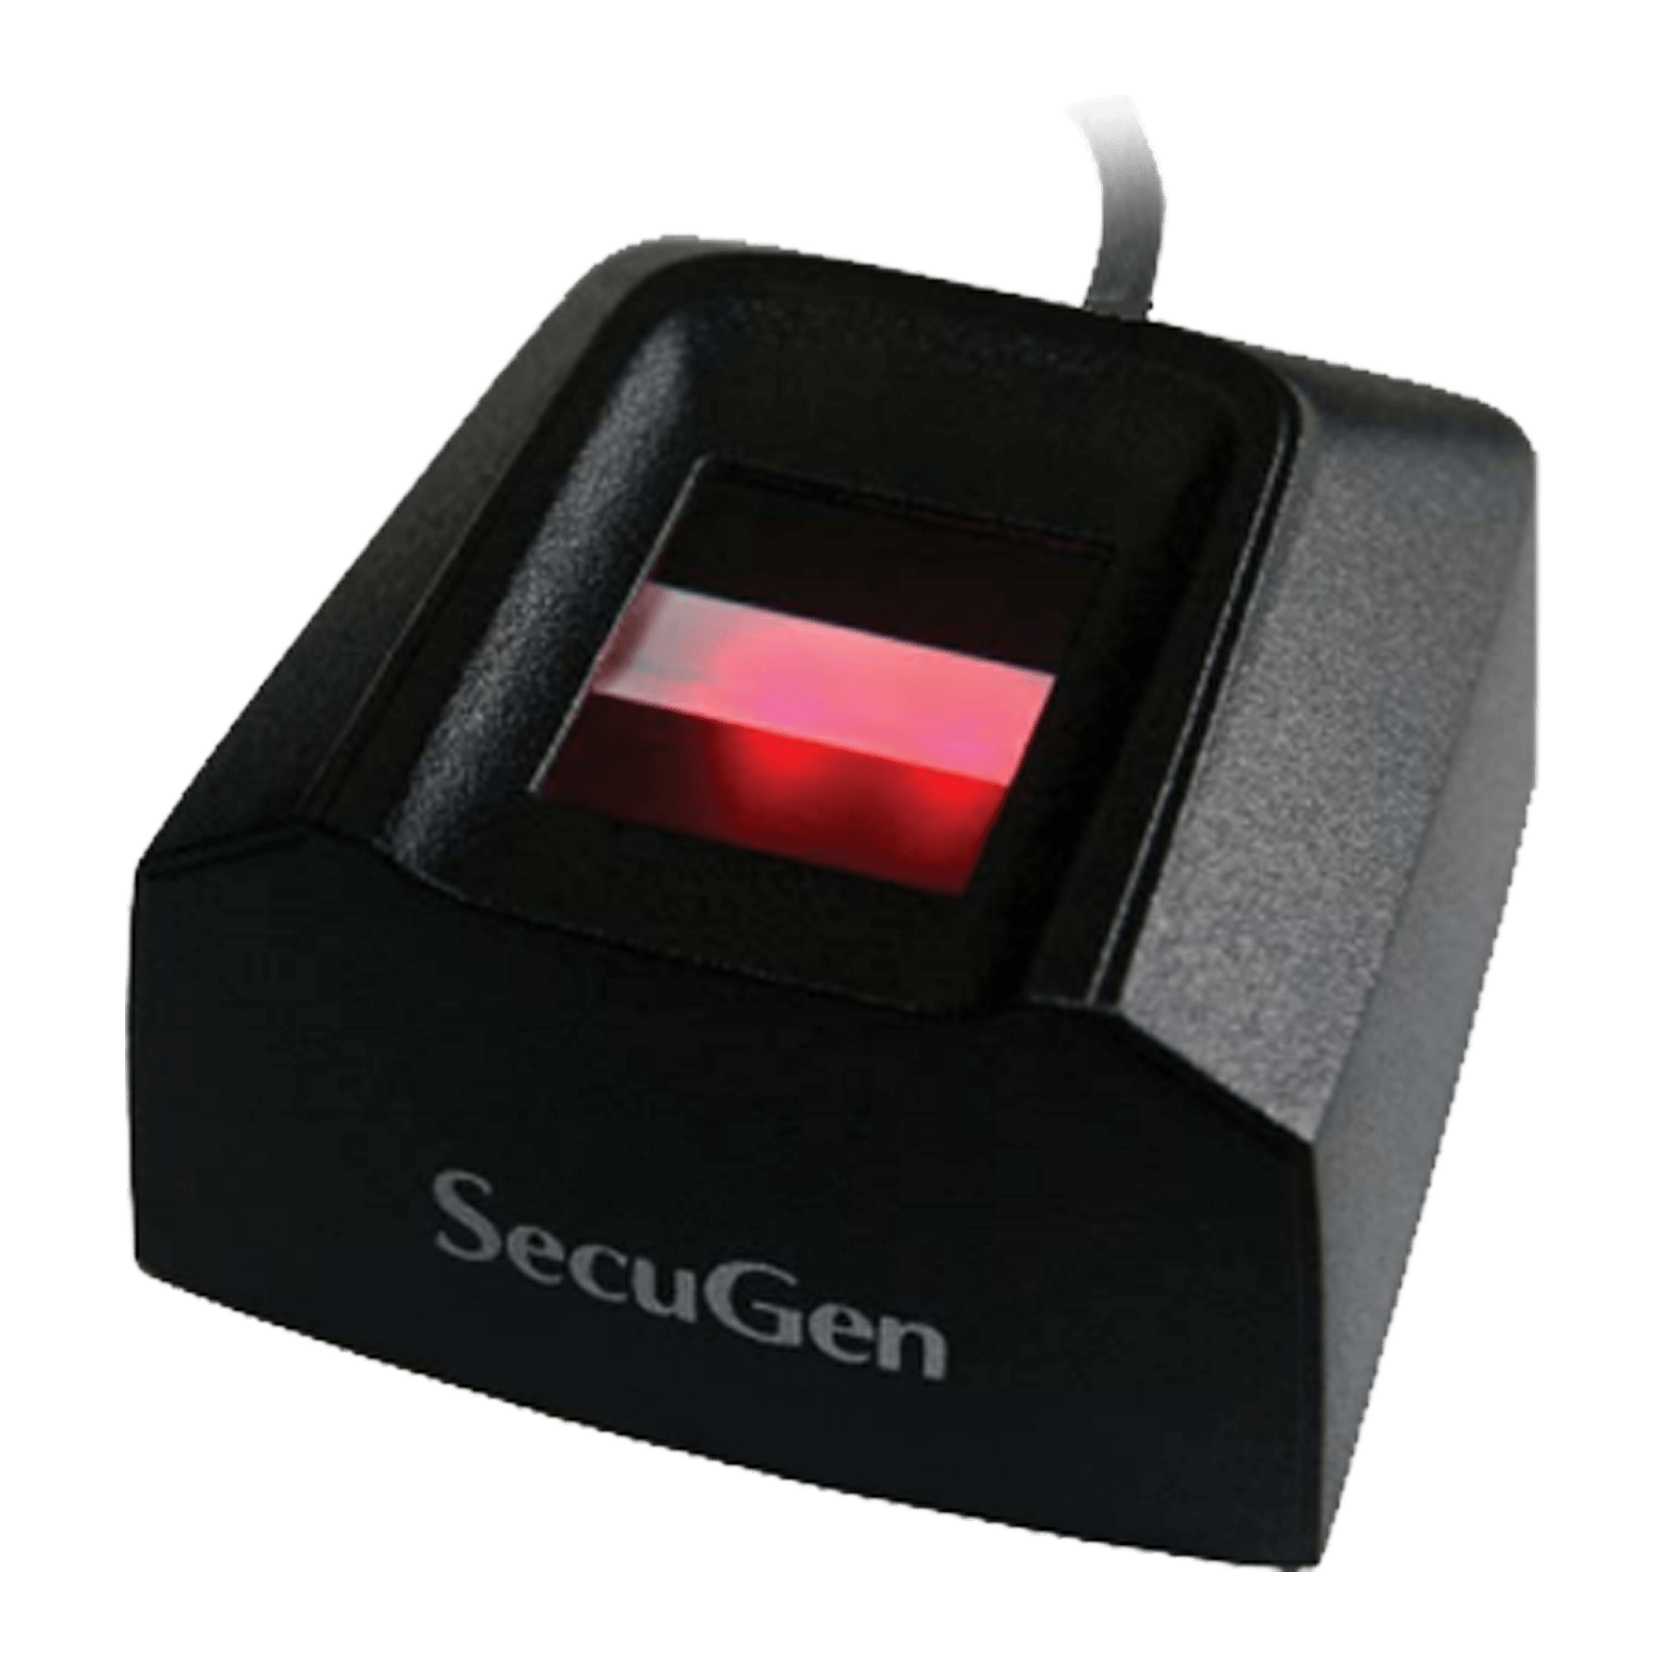 SecuGen hamster pro 20 biometric scanner